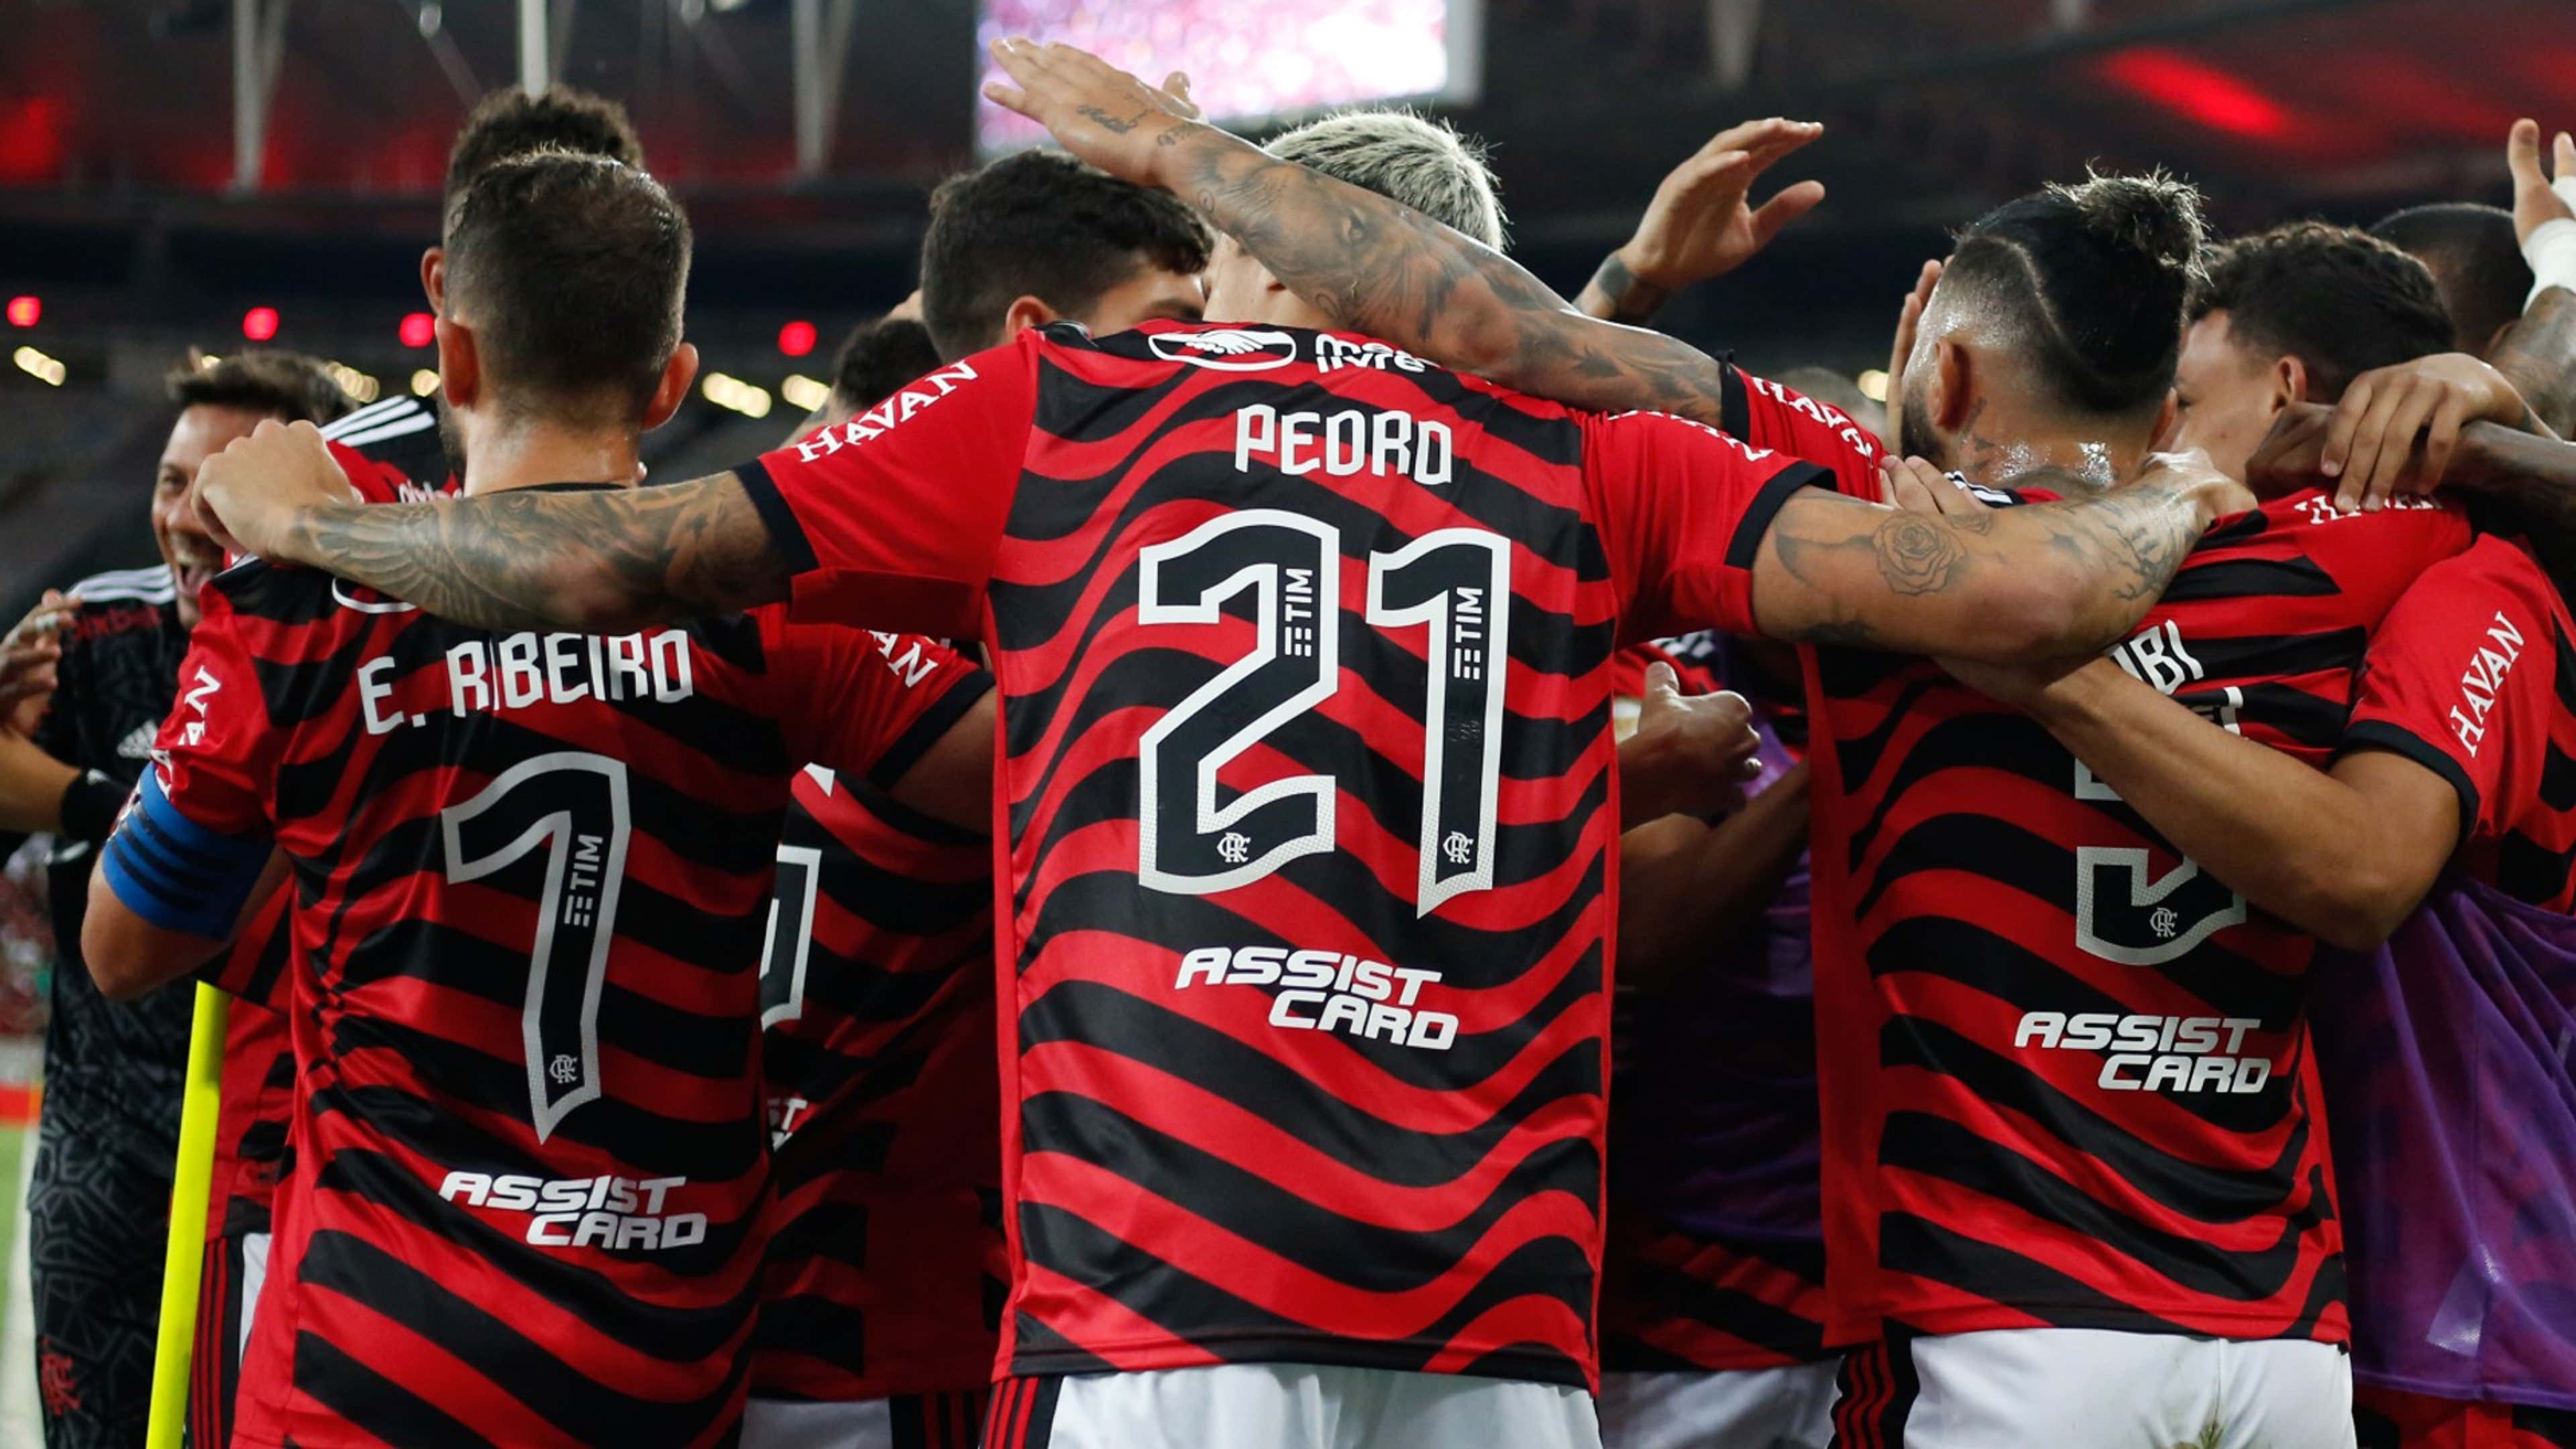 Onde assistir: Flamengo x Red Bull Bragantino ao vivo vai passar